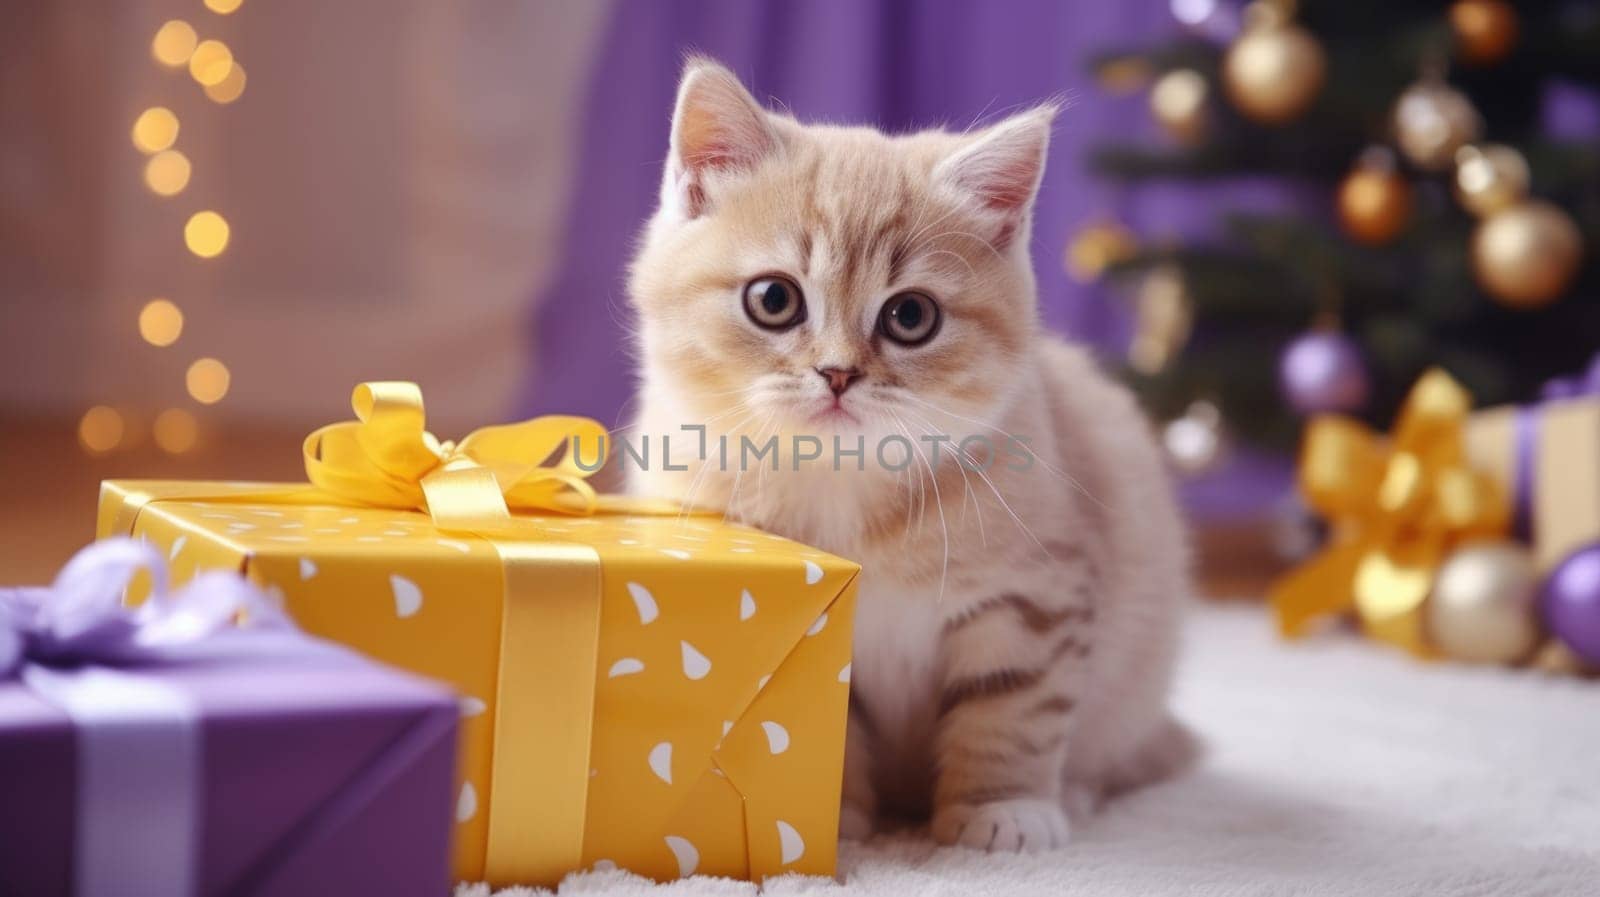 cat kitten with gift box, ai by rachellaiyl